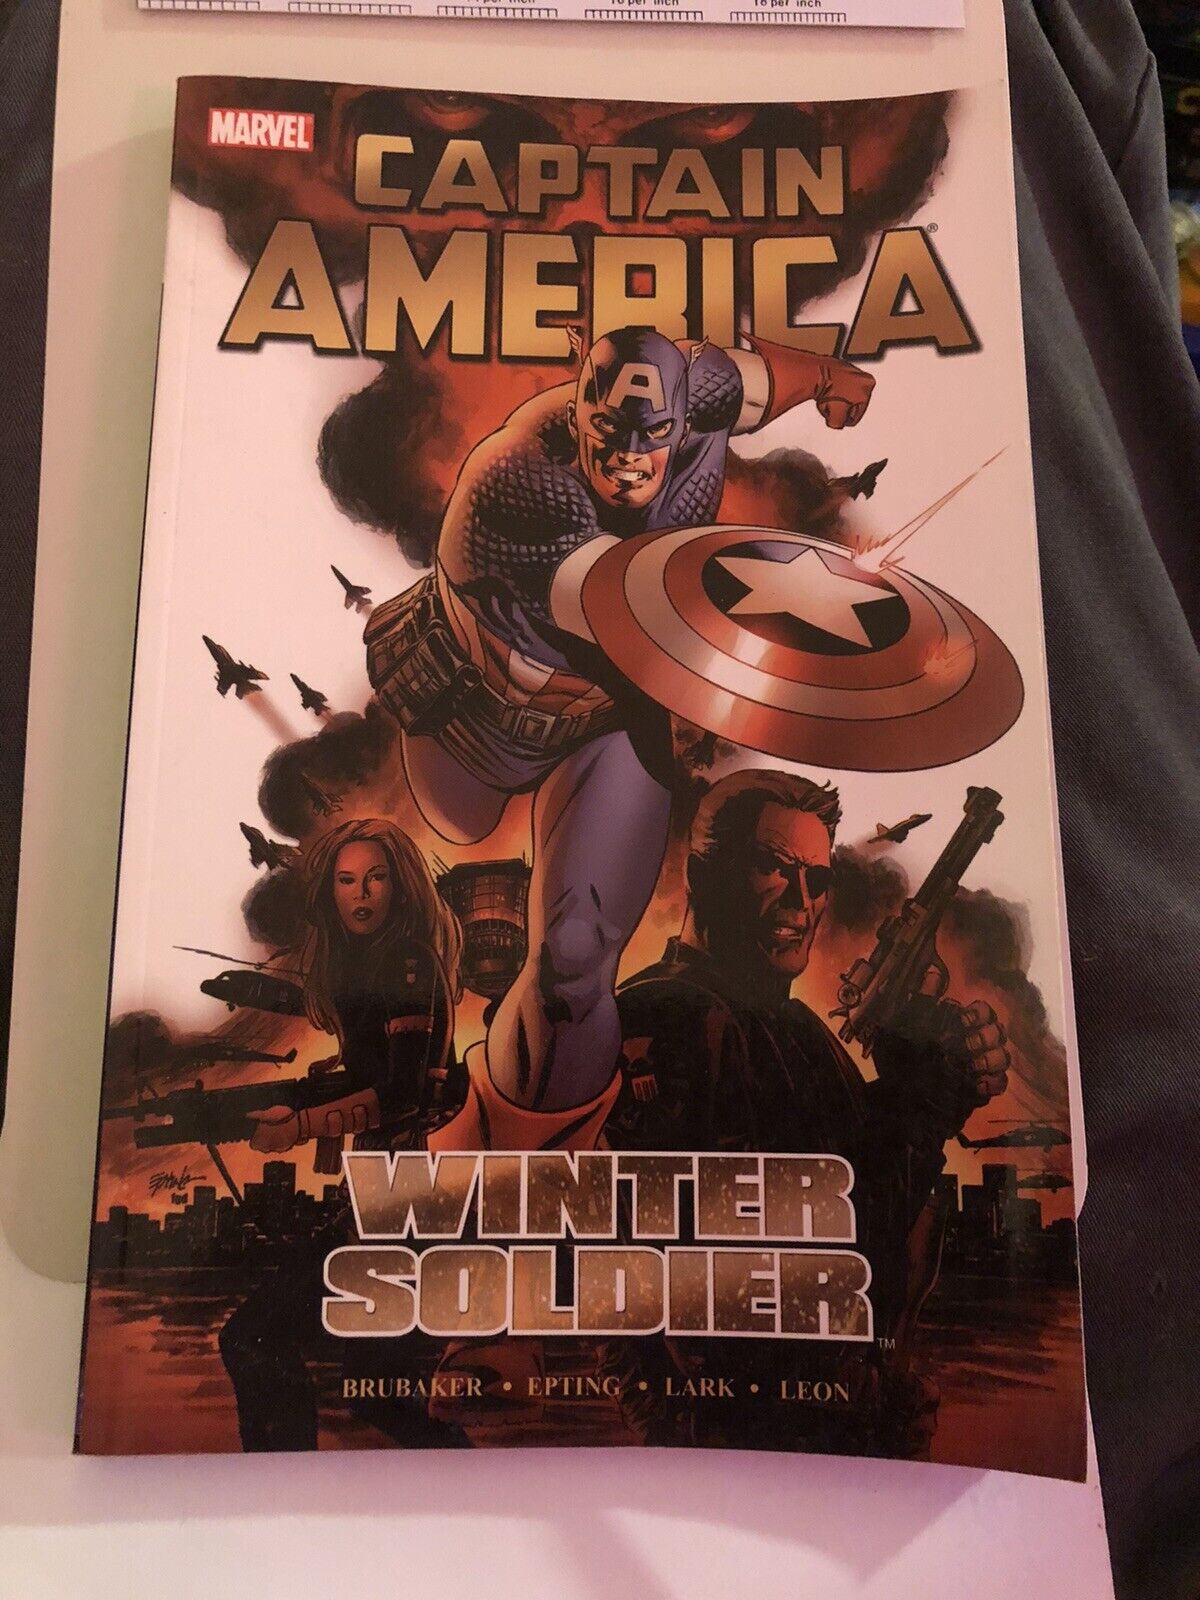 Captain America #1 (Marvel Comics January 2005)